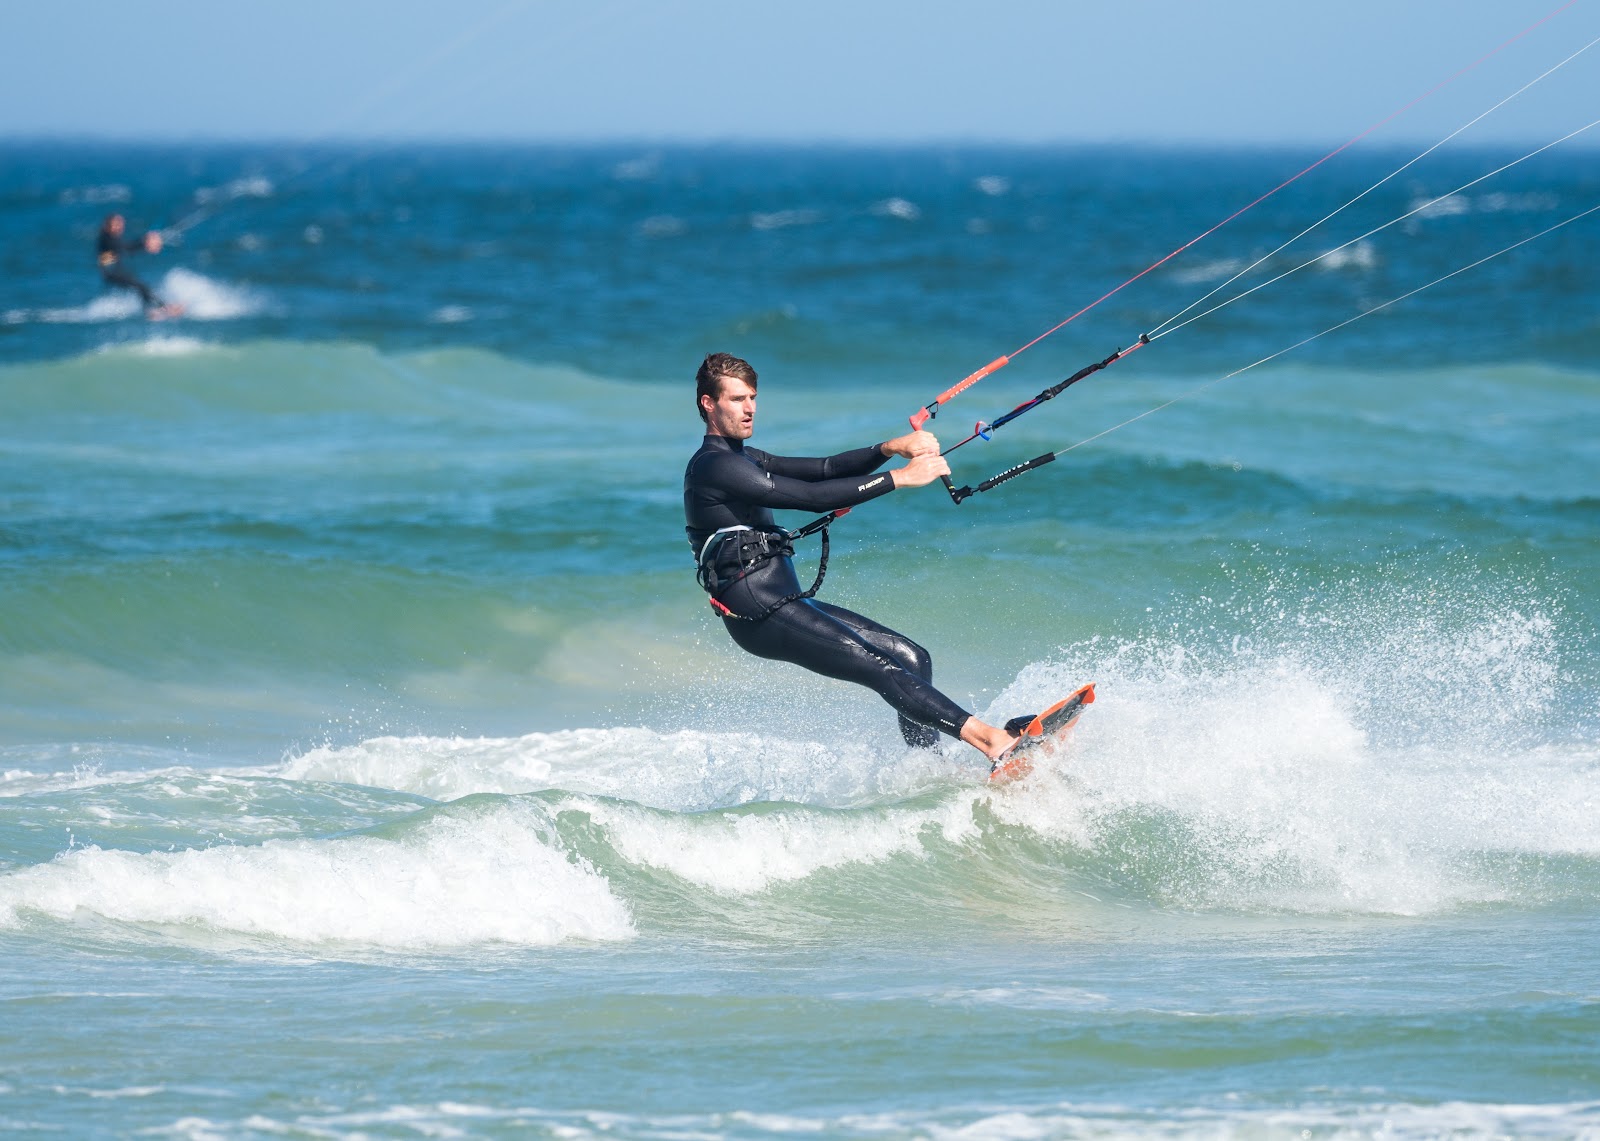 https://get.pxhere.com/photo/kitesurfing-surfing-equipment-and-supplies-windsports-wind-wave-kite-sports-wave-boardsport-surfboard-surface-water-sports-water-water-sport-wind-sea-extreme-sport-vacation-surfing-sky-fun-1546349.jpg